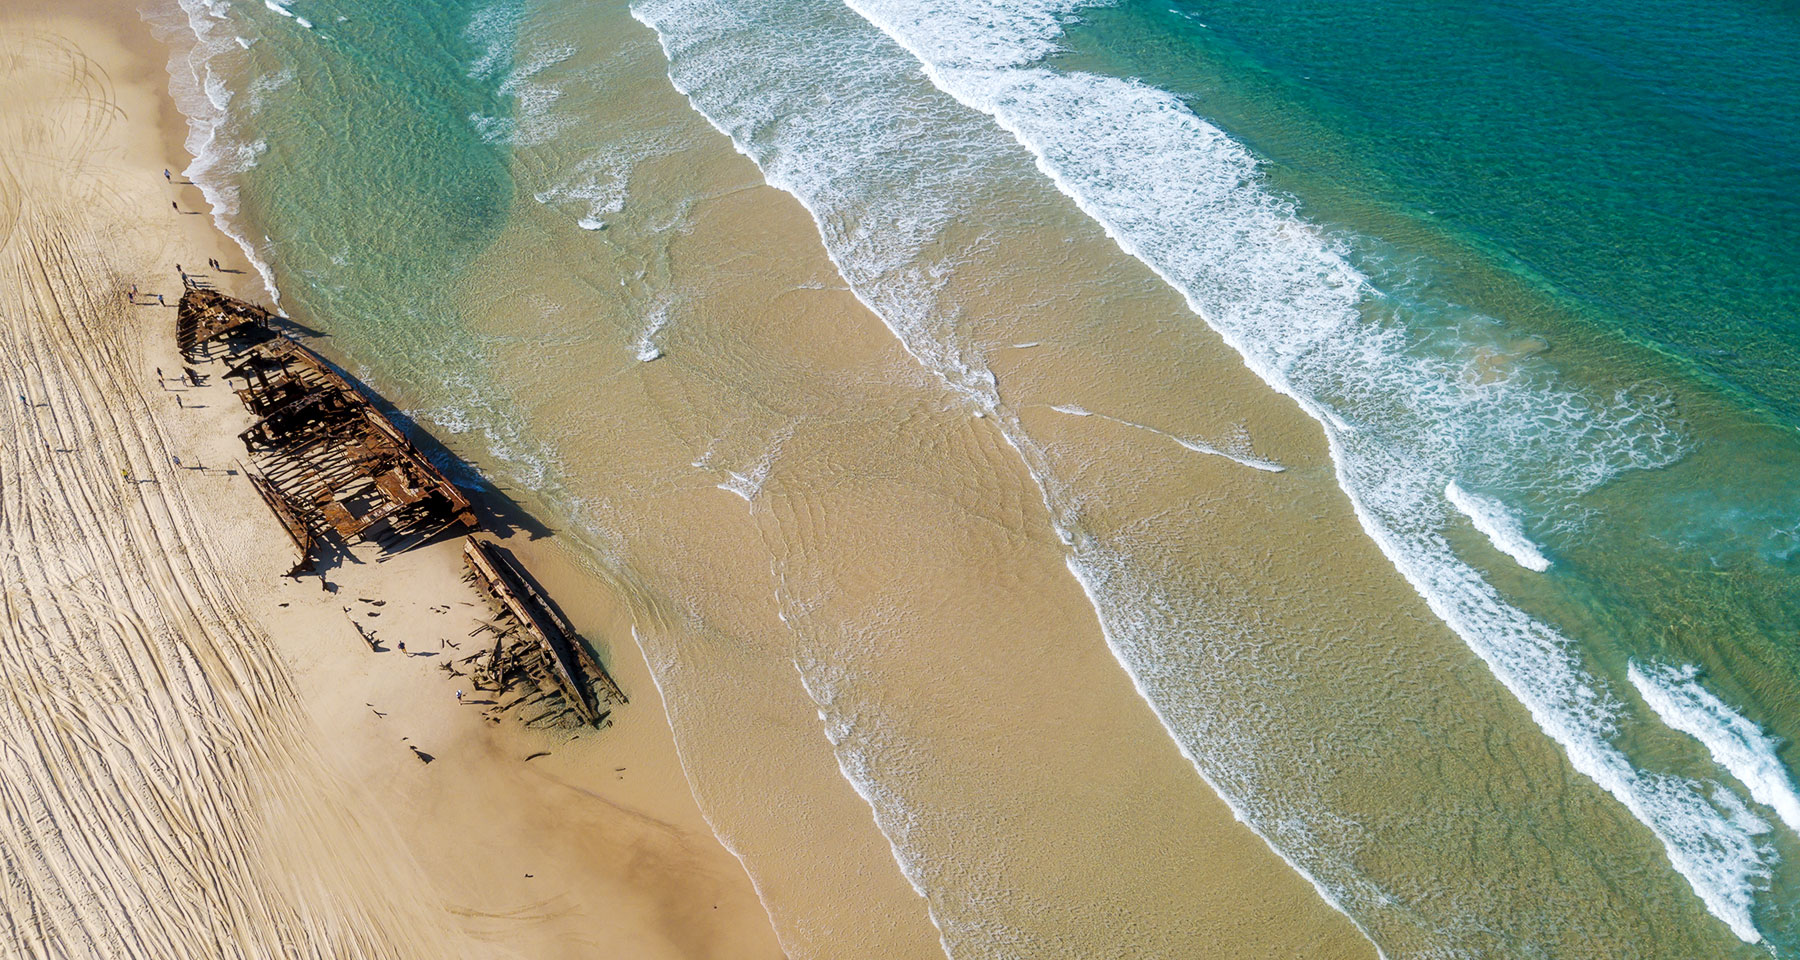 Maheno Shipwreck - Air Fraser Island